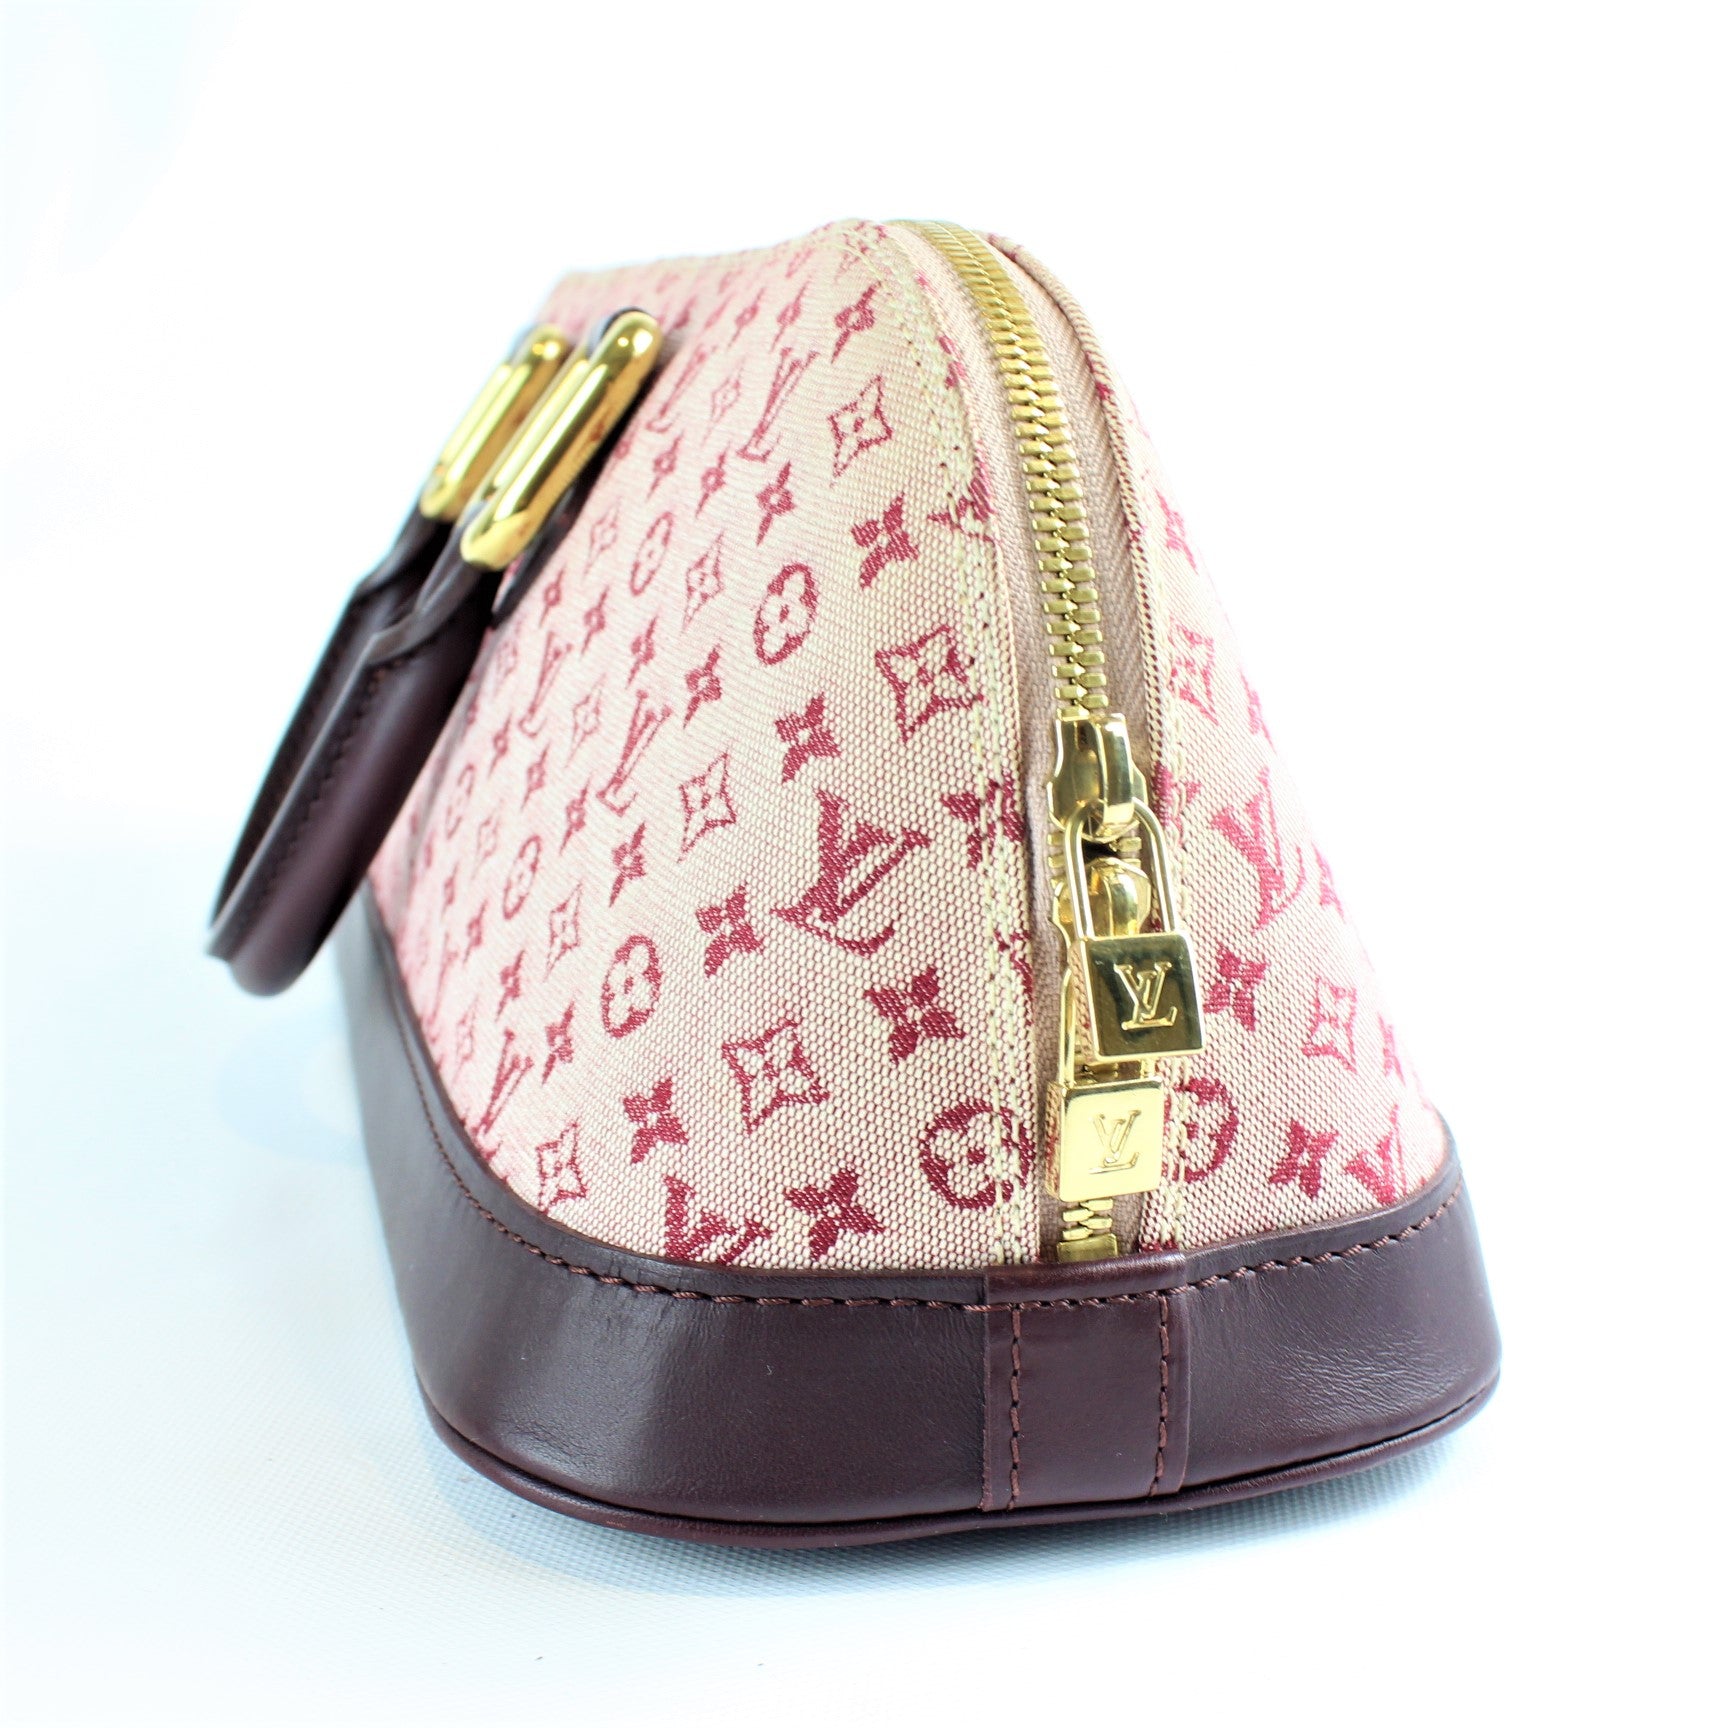 Louis Vuitton Alma Handbag Mini Lin Horizontal Green 444111